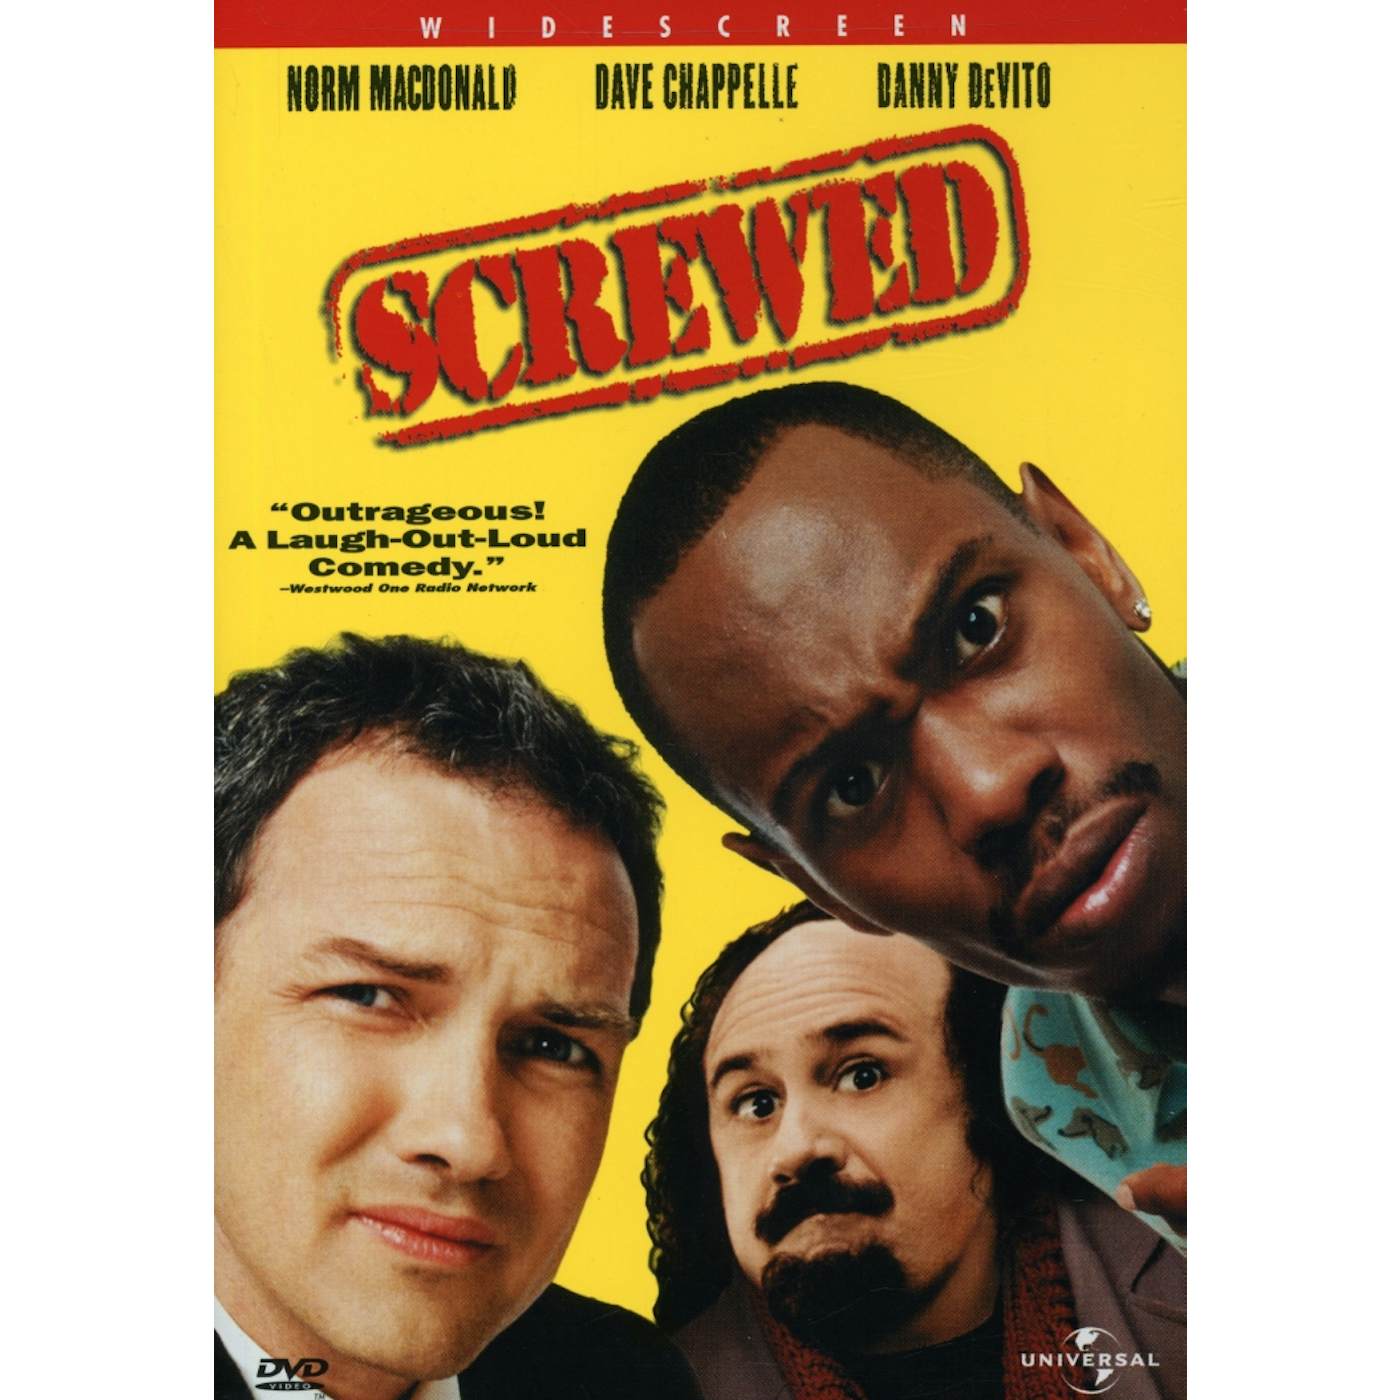 SCREWED (2000) DVD